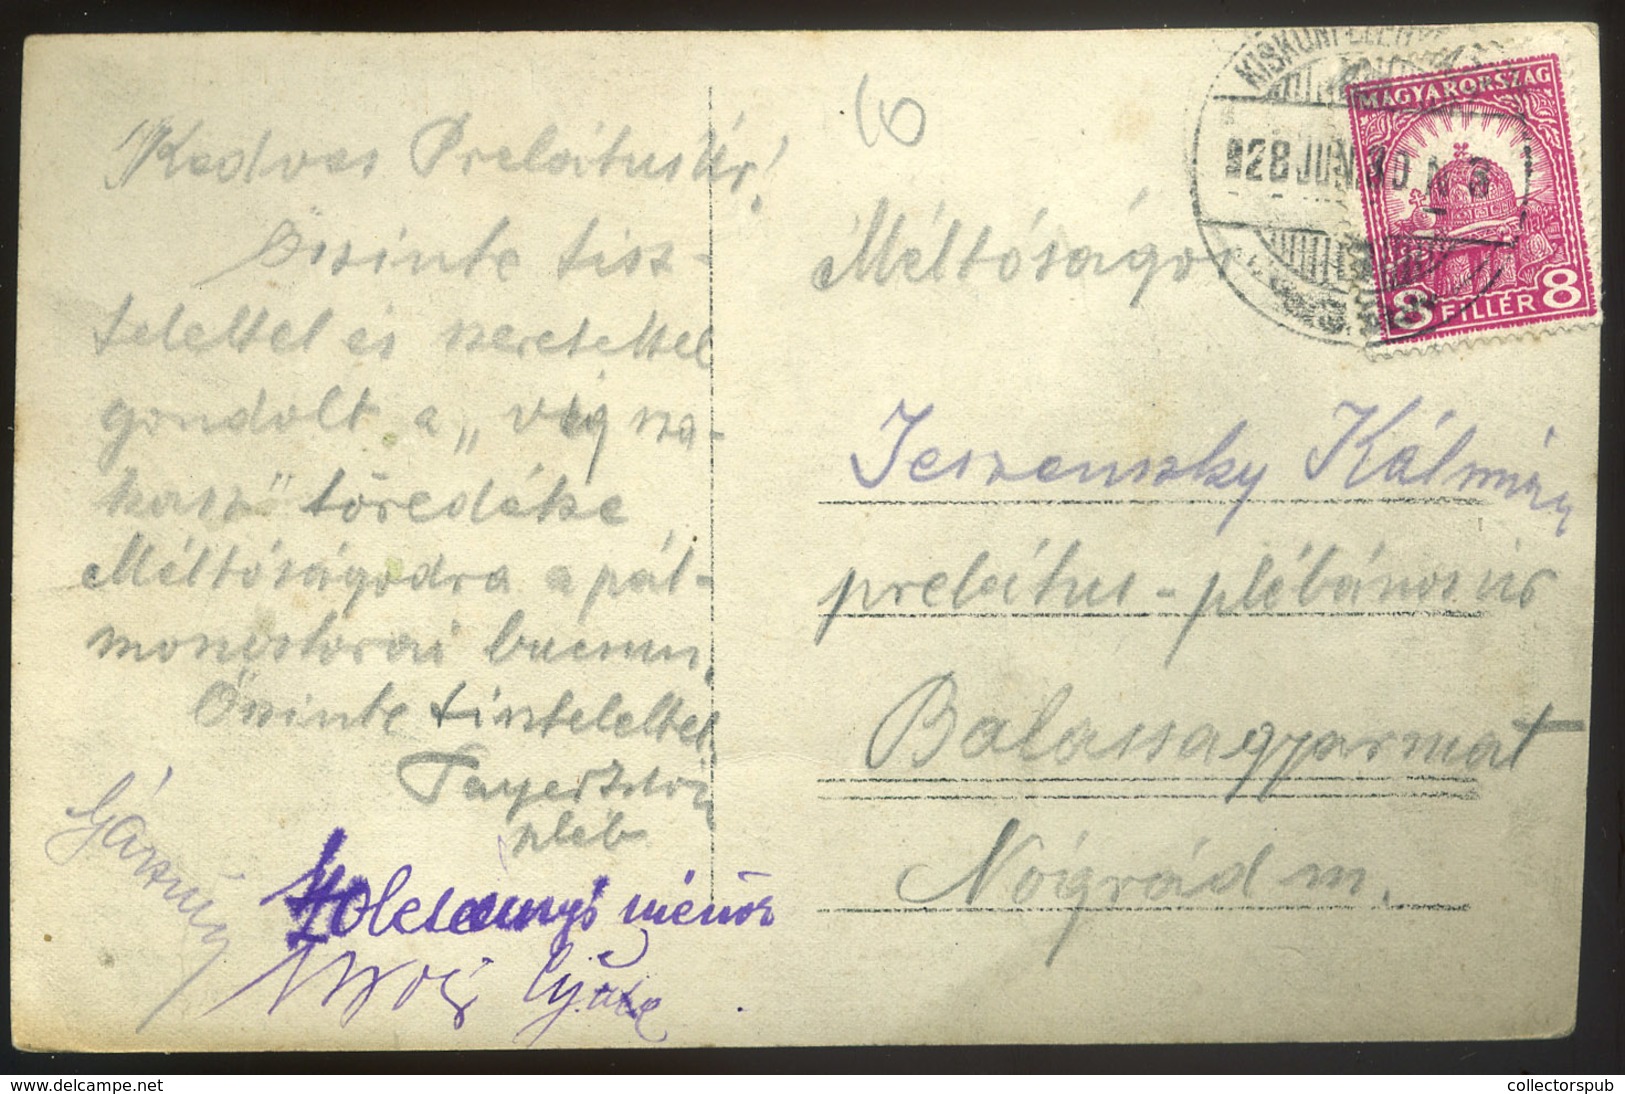 PÁLMONOSTORA 1928. Ünnepség, Fotós Képeslap  /  Festivity Photo Vintage Pic. P.card - Hongarije